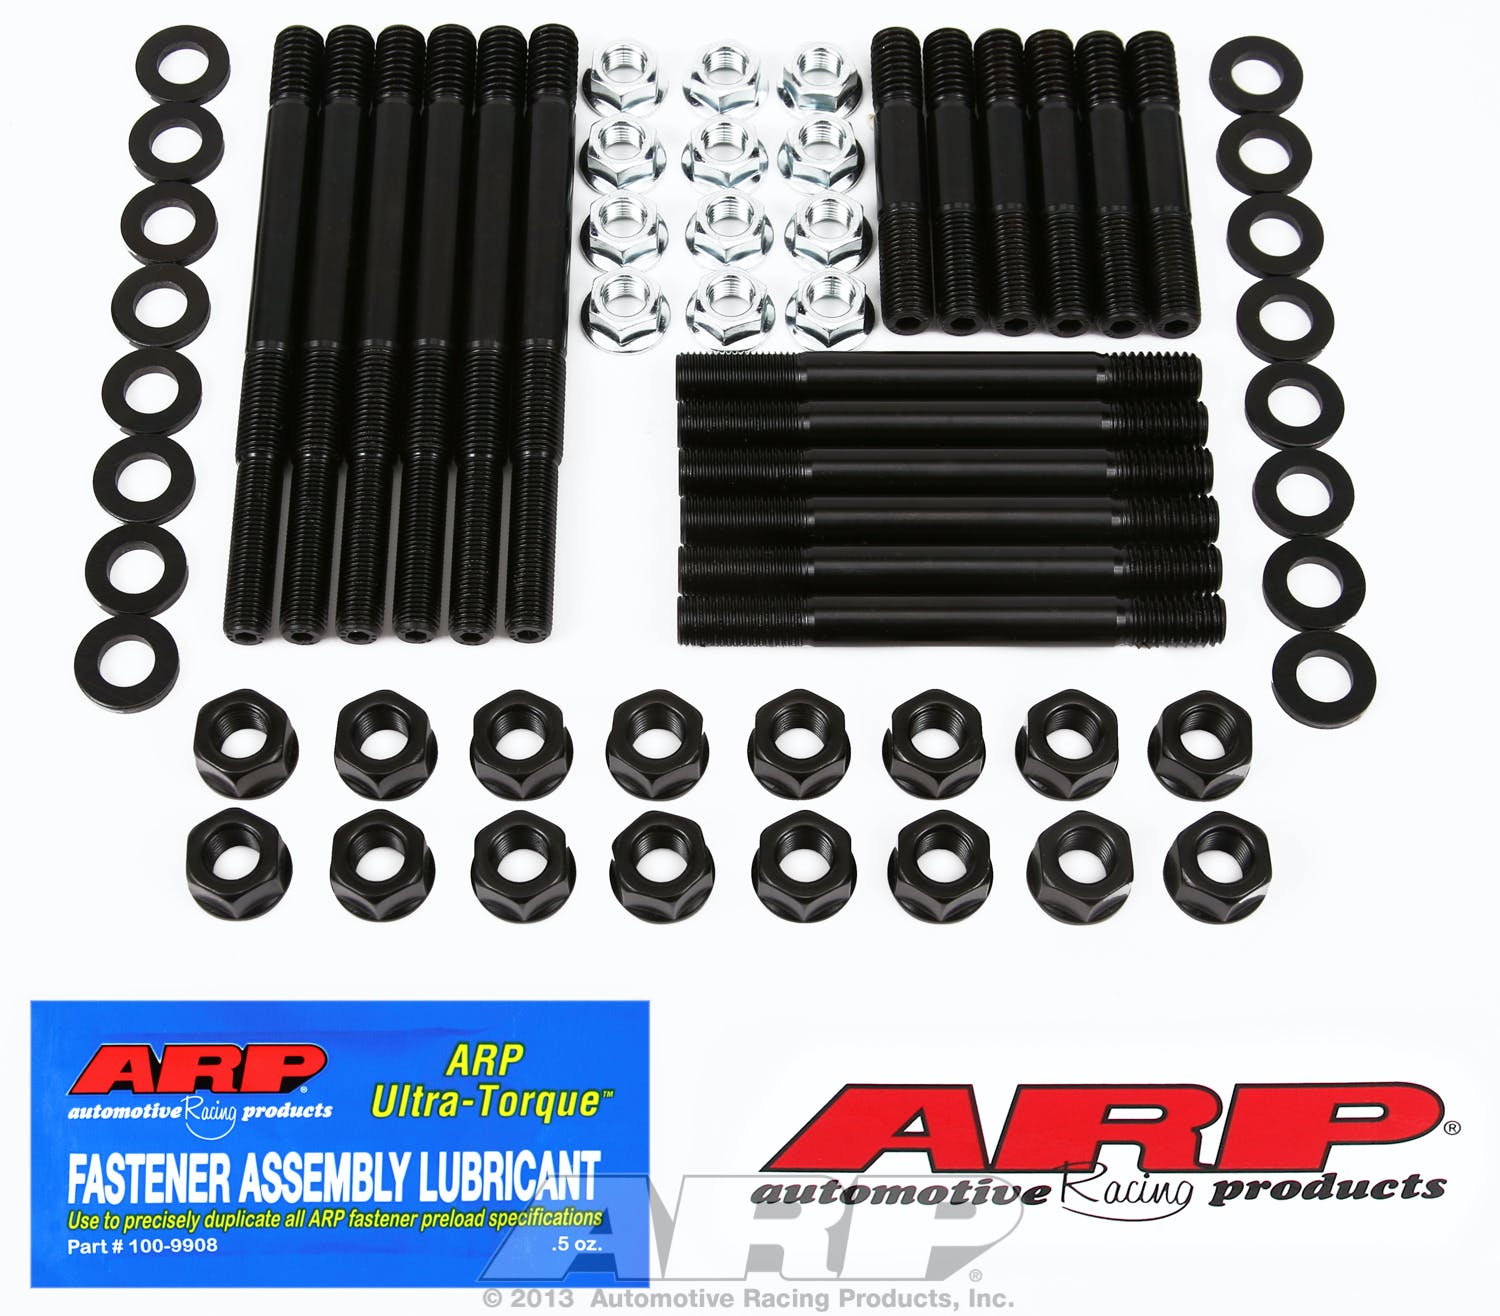 ARP 234-5610 Main Stud Kit